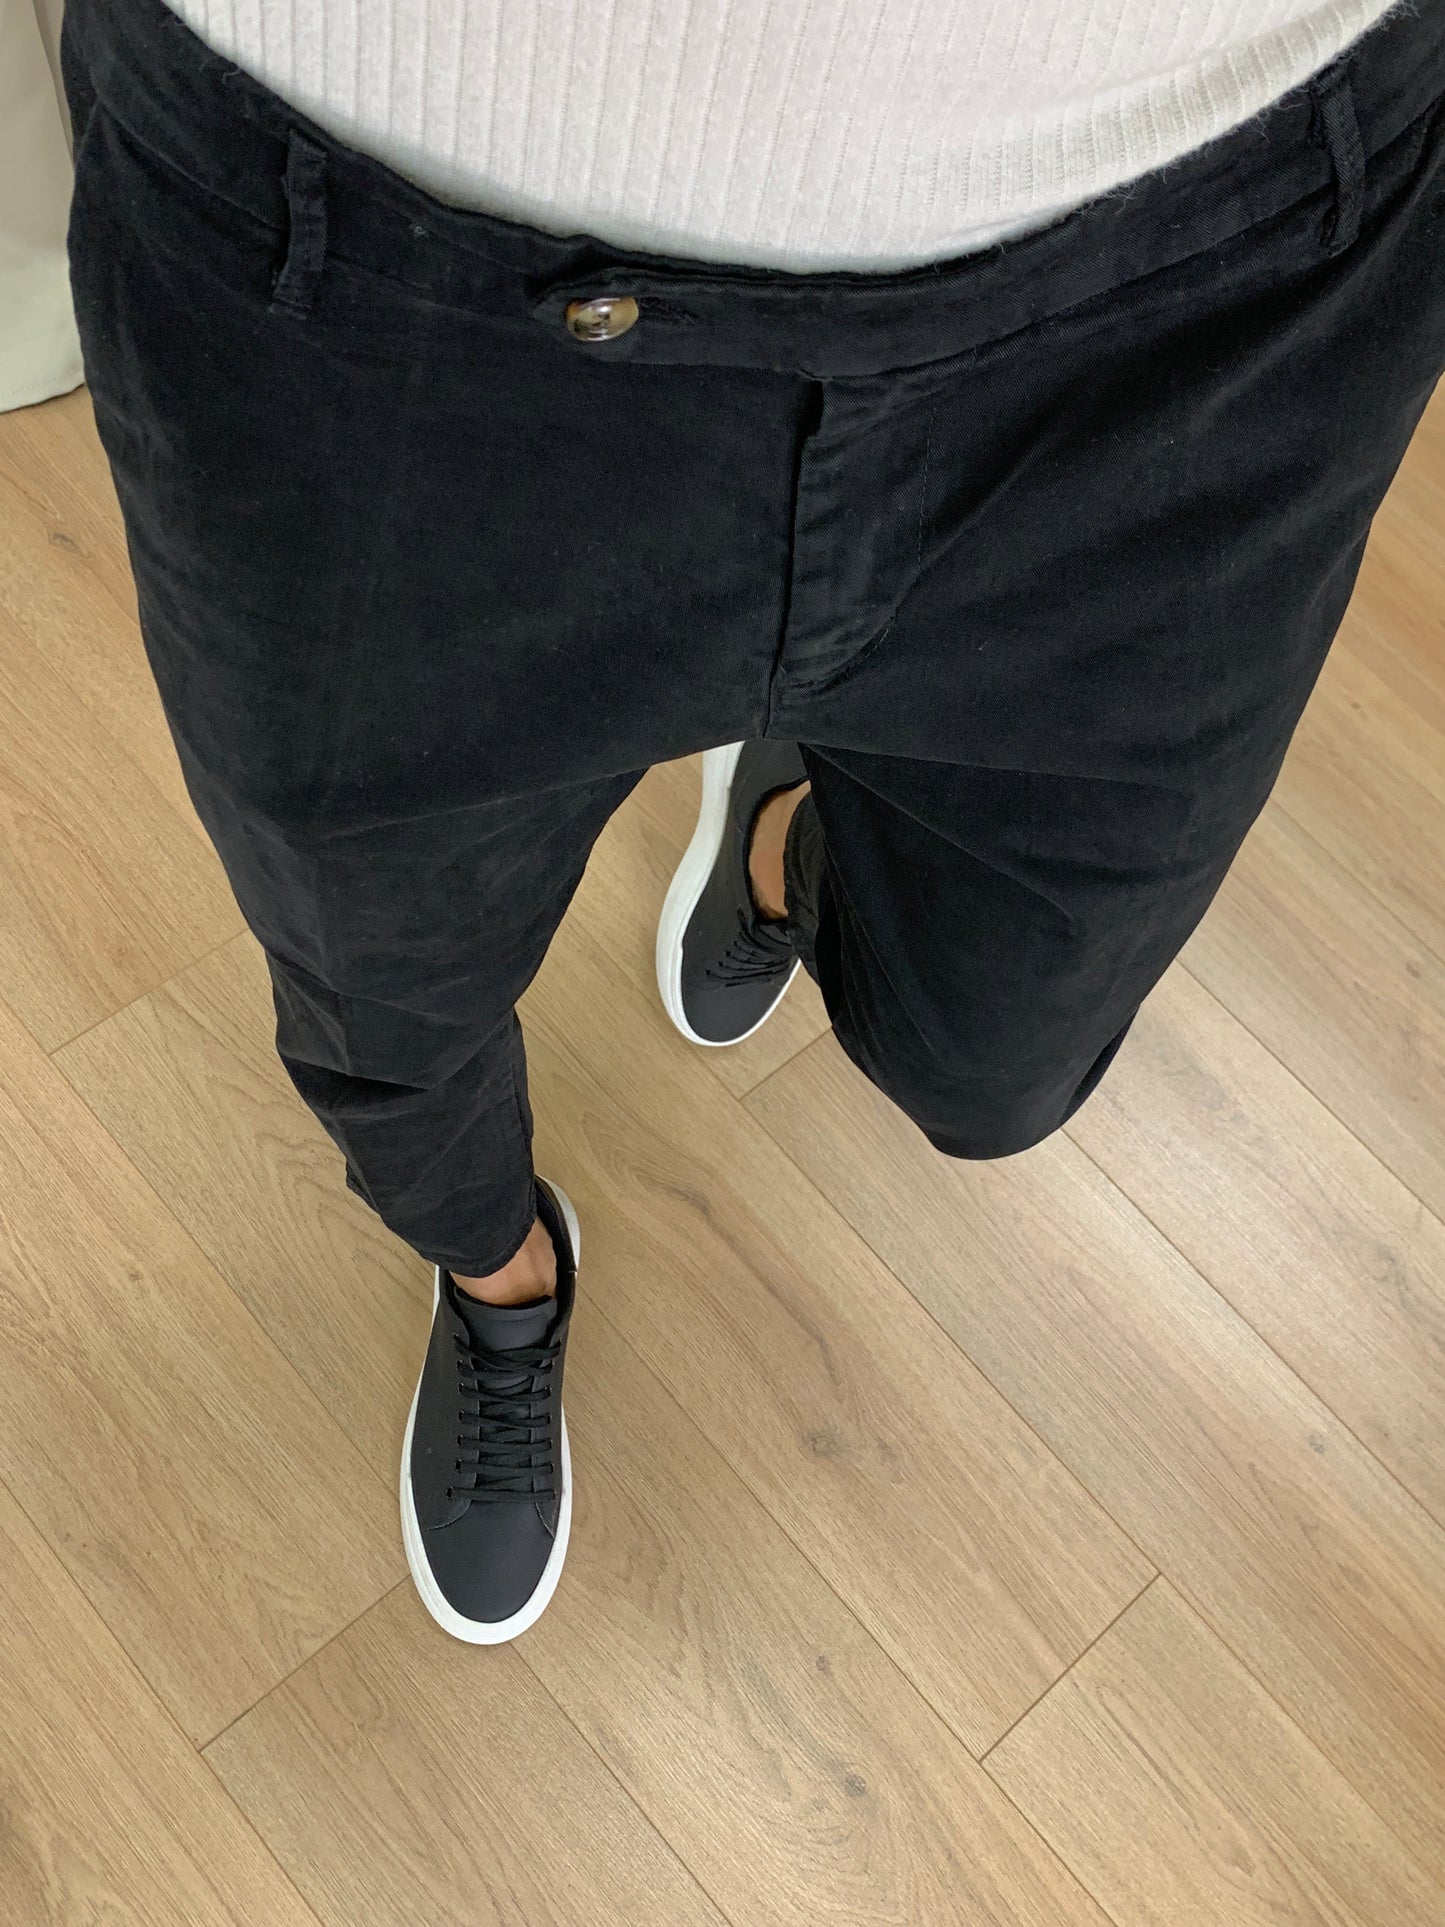 Jeans/Pantalone Tracker regular-slim col. Nero